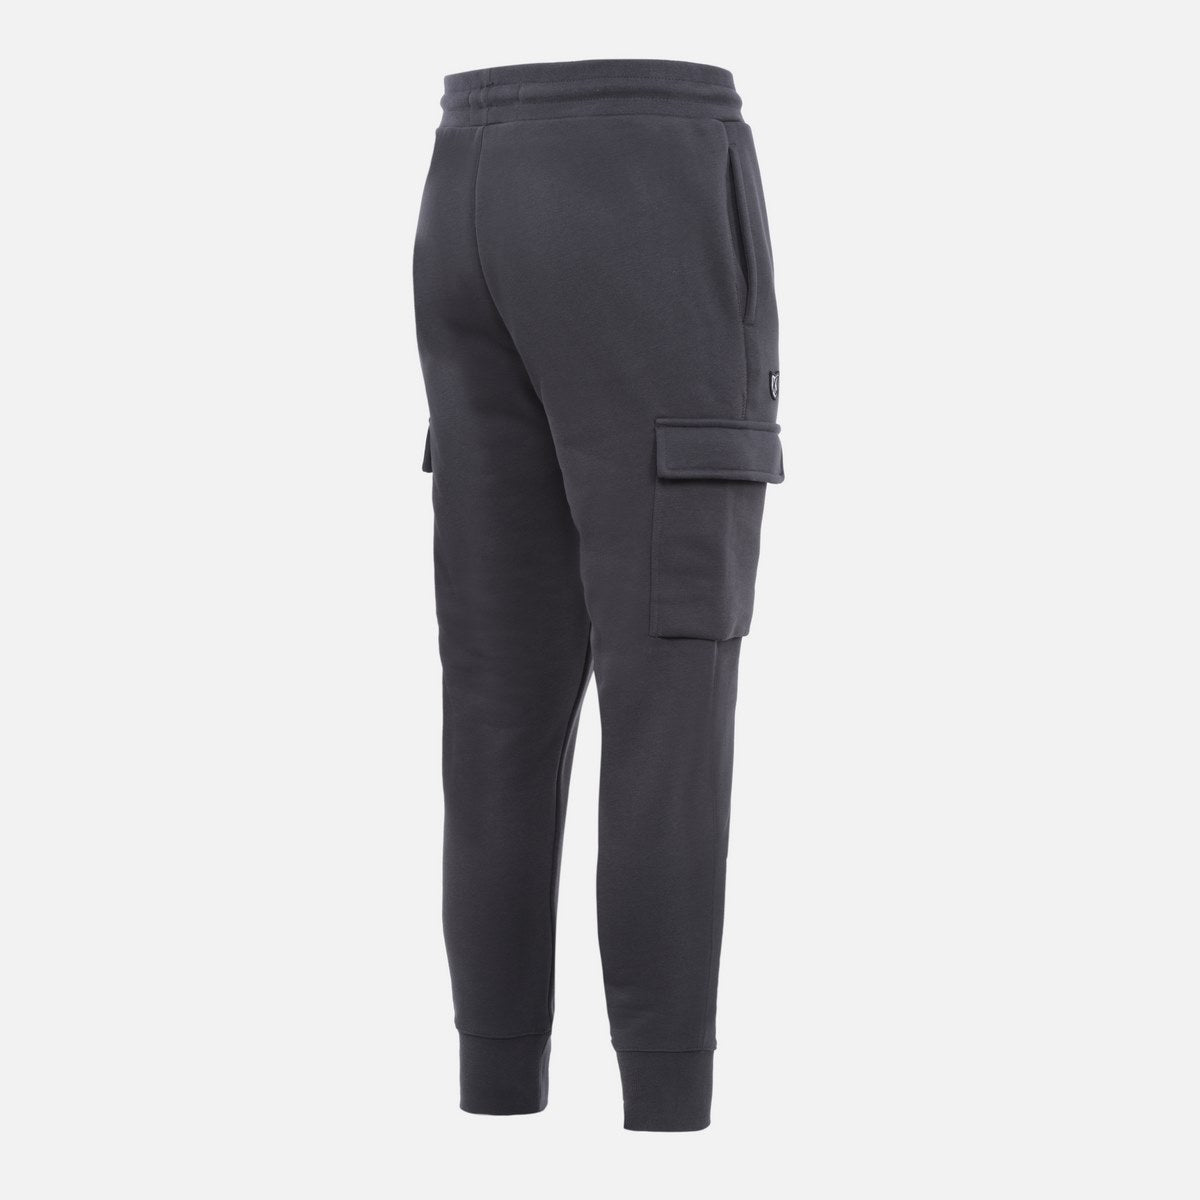 FK Cargo Pants - Charcoal Gray